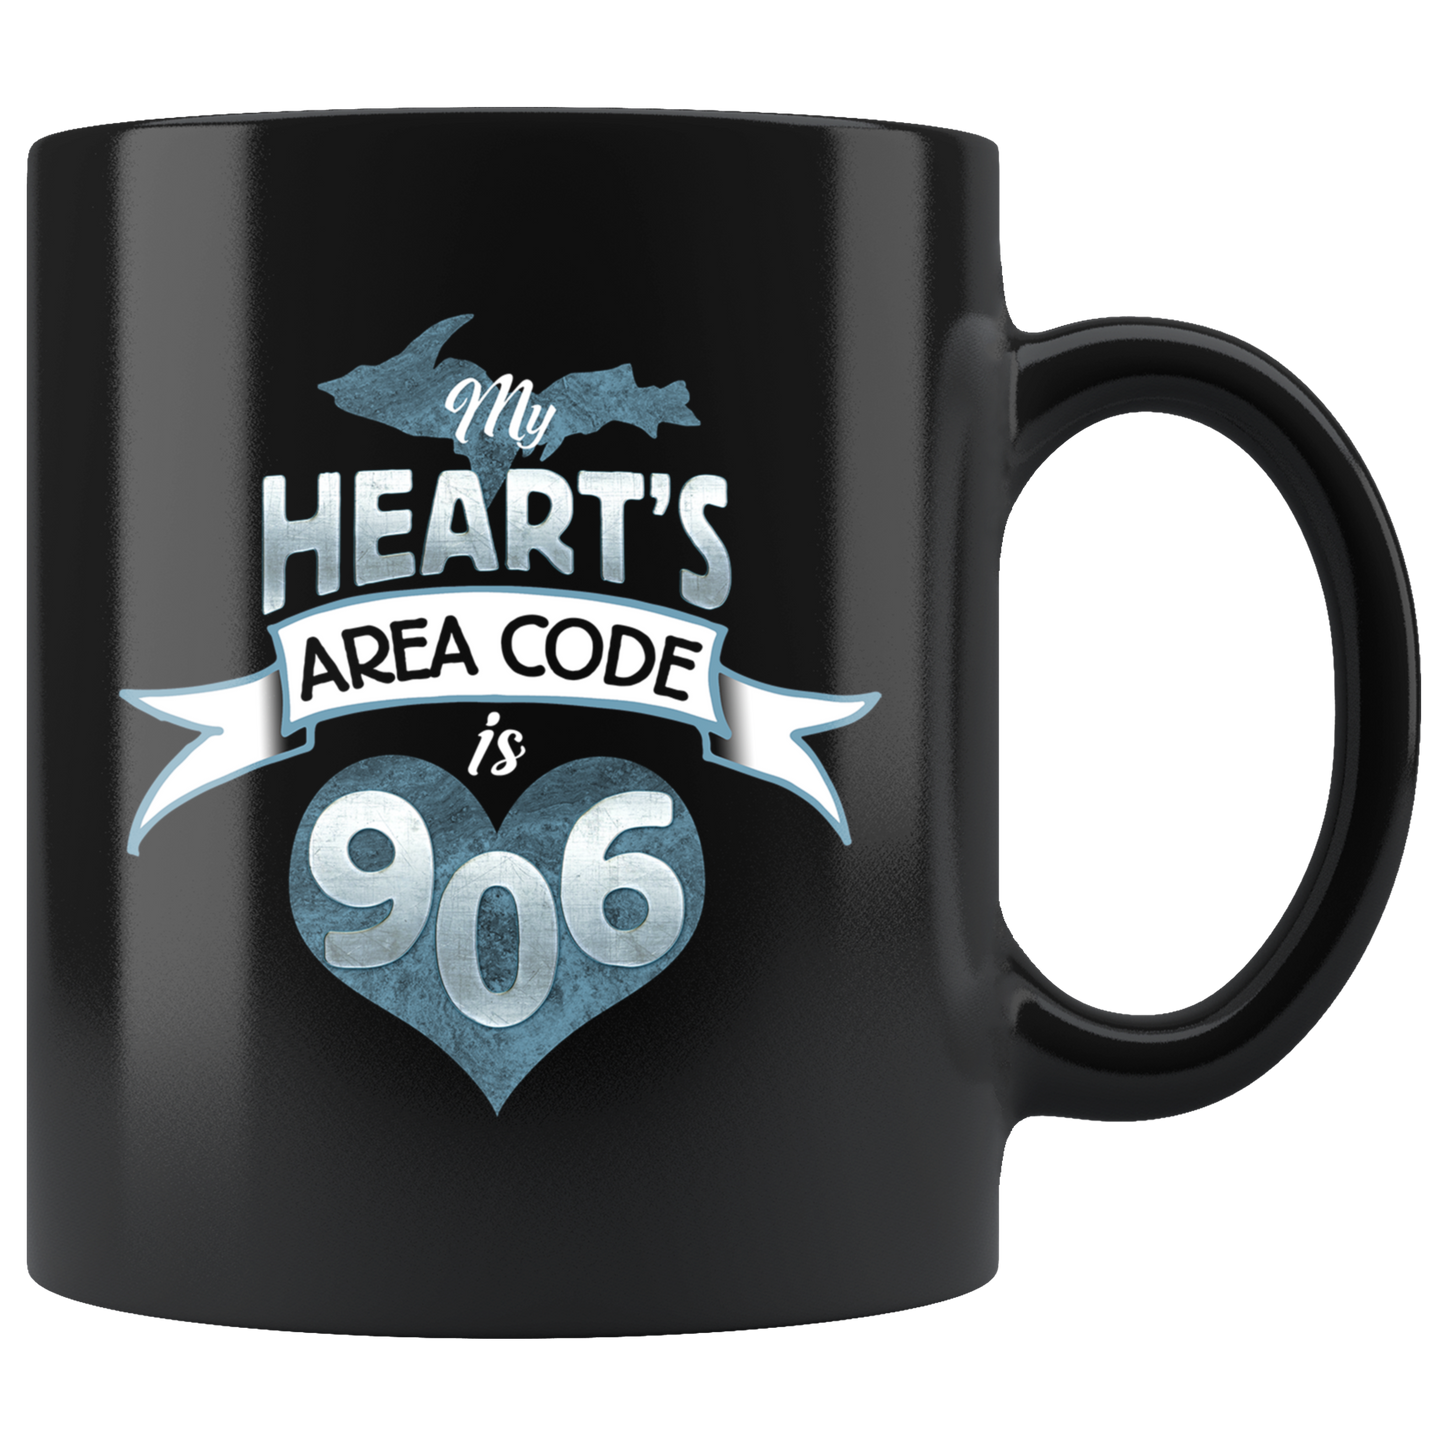 Yooper Mug - My Heart's Area Code is 906